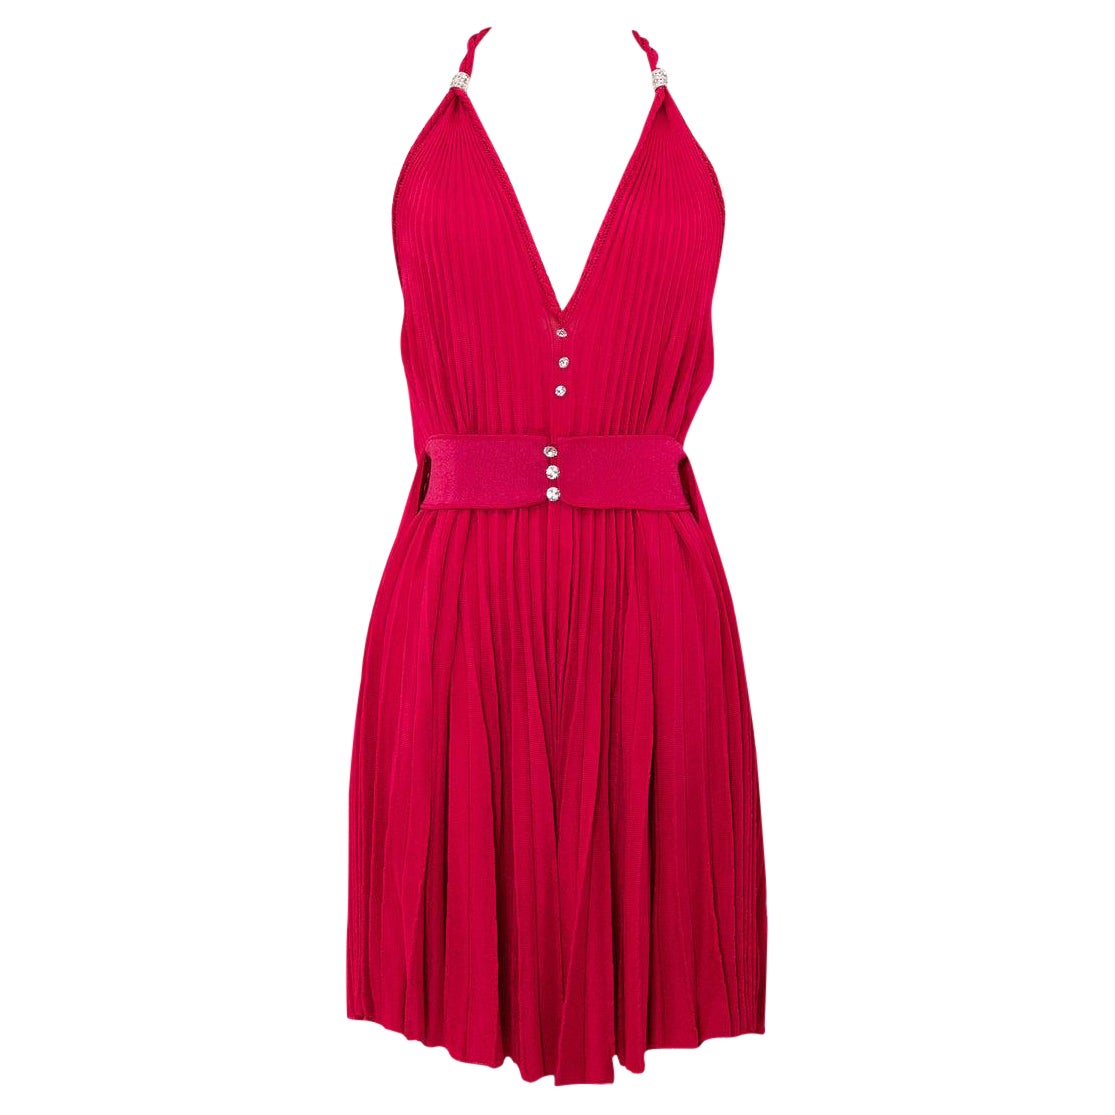 Azzaro Halter Raspberry Pink Dress, Size 38FR For Sale